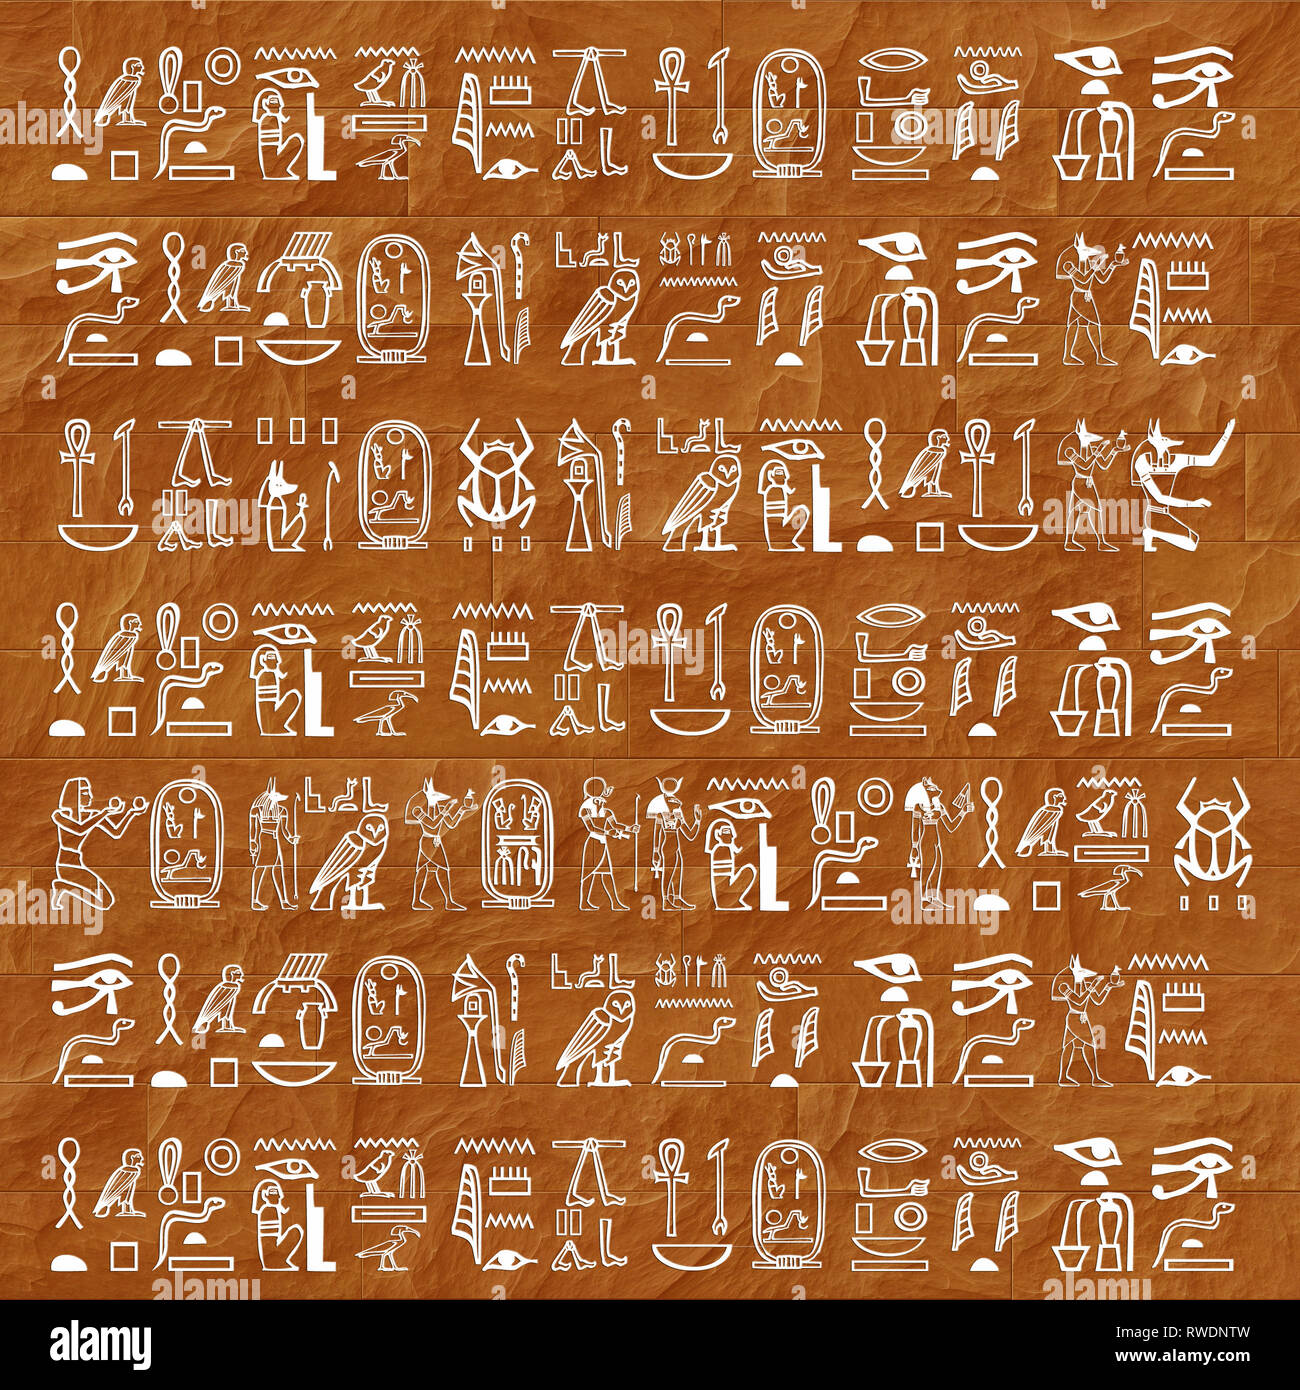 wall with ancient Egyptian hieroglyphics Stock Photo